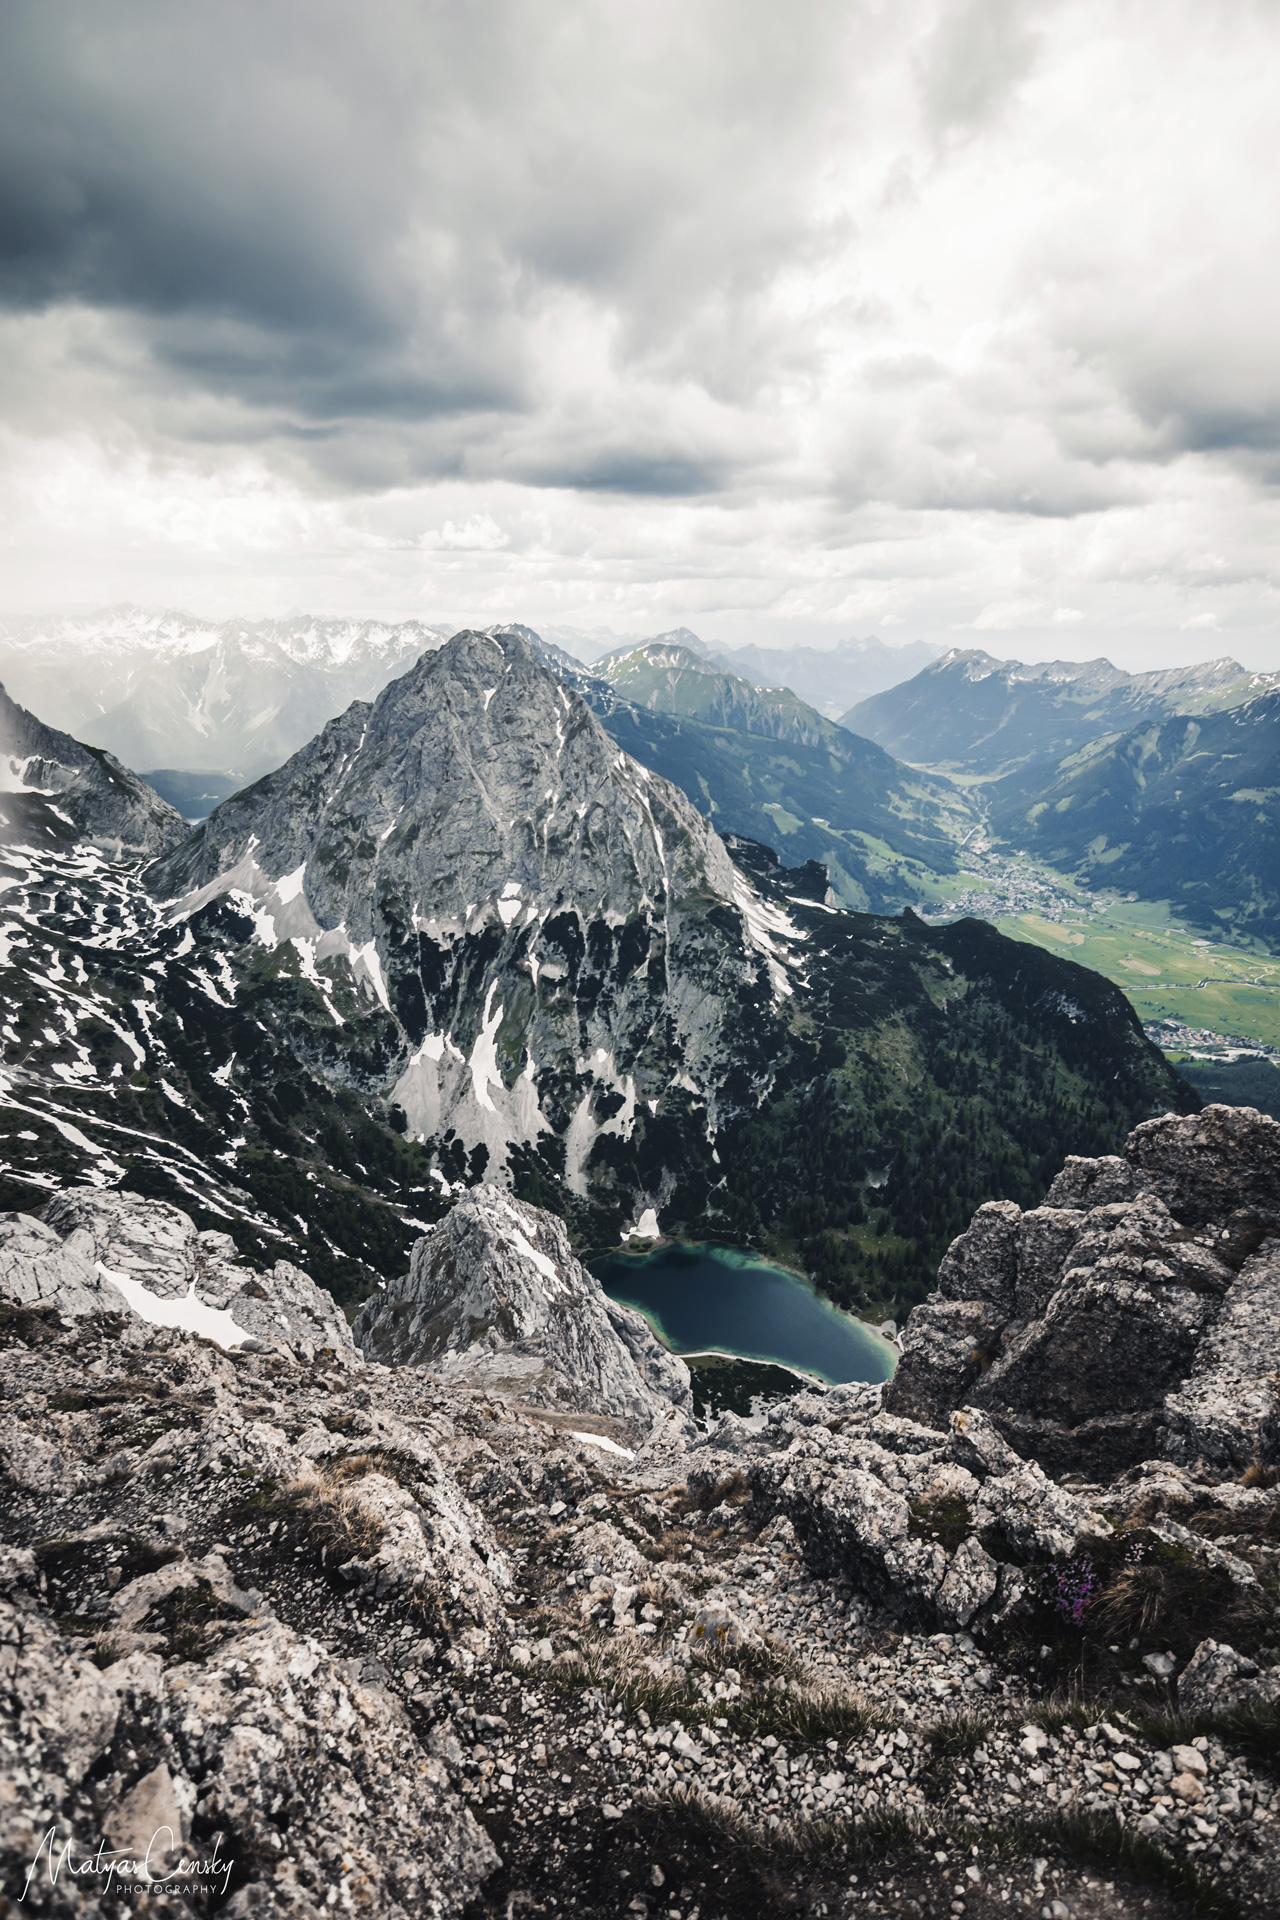 Photo o Seebensee and Ehrwalder Sonnenspitze taken from top of Tajakante Klettersteig in Austria.